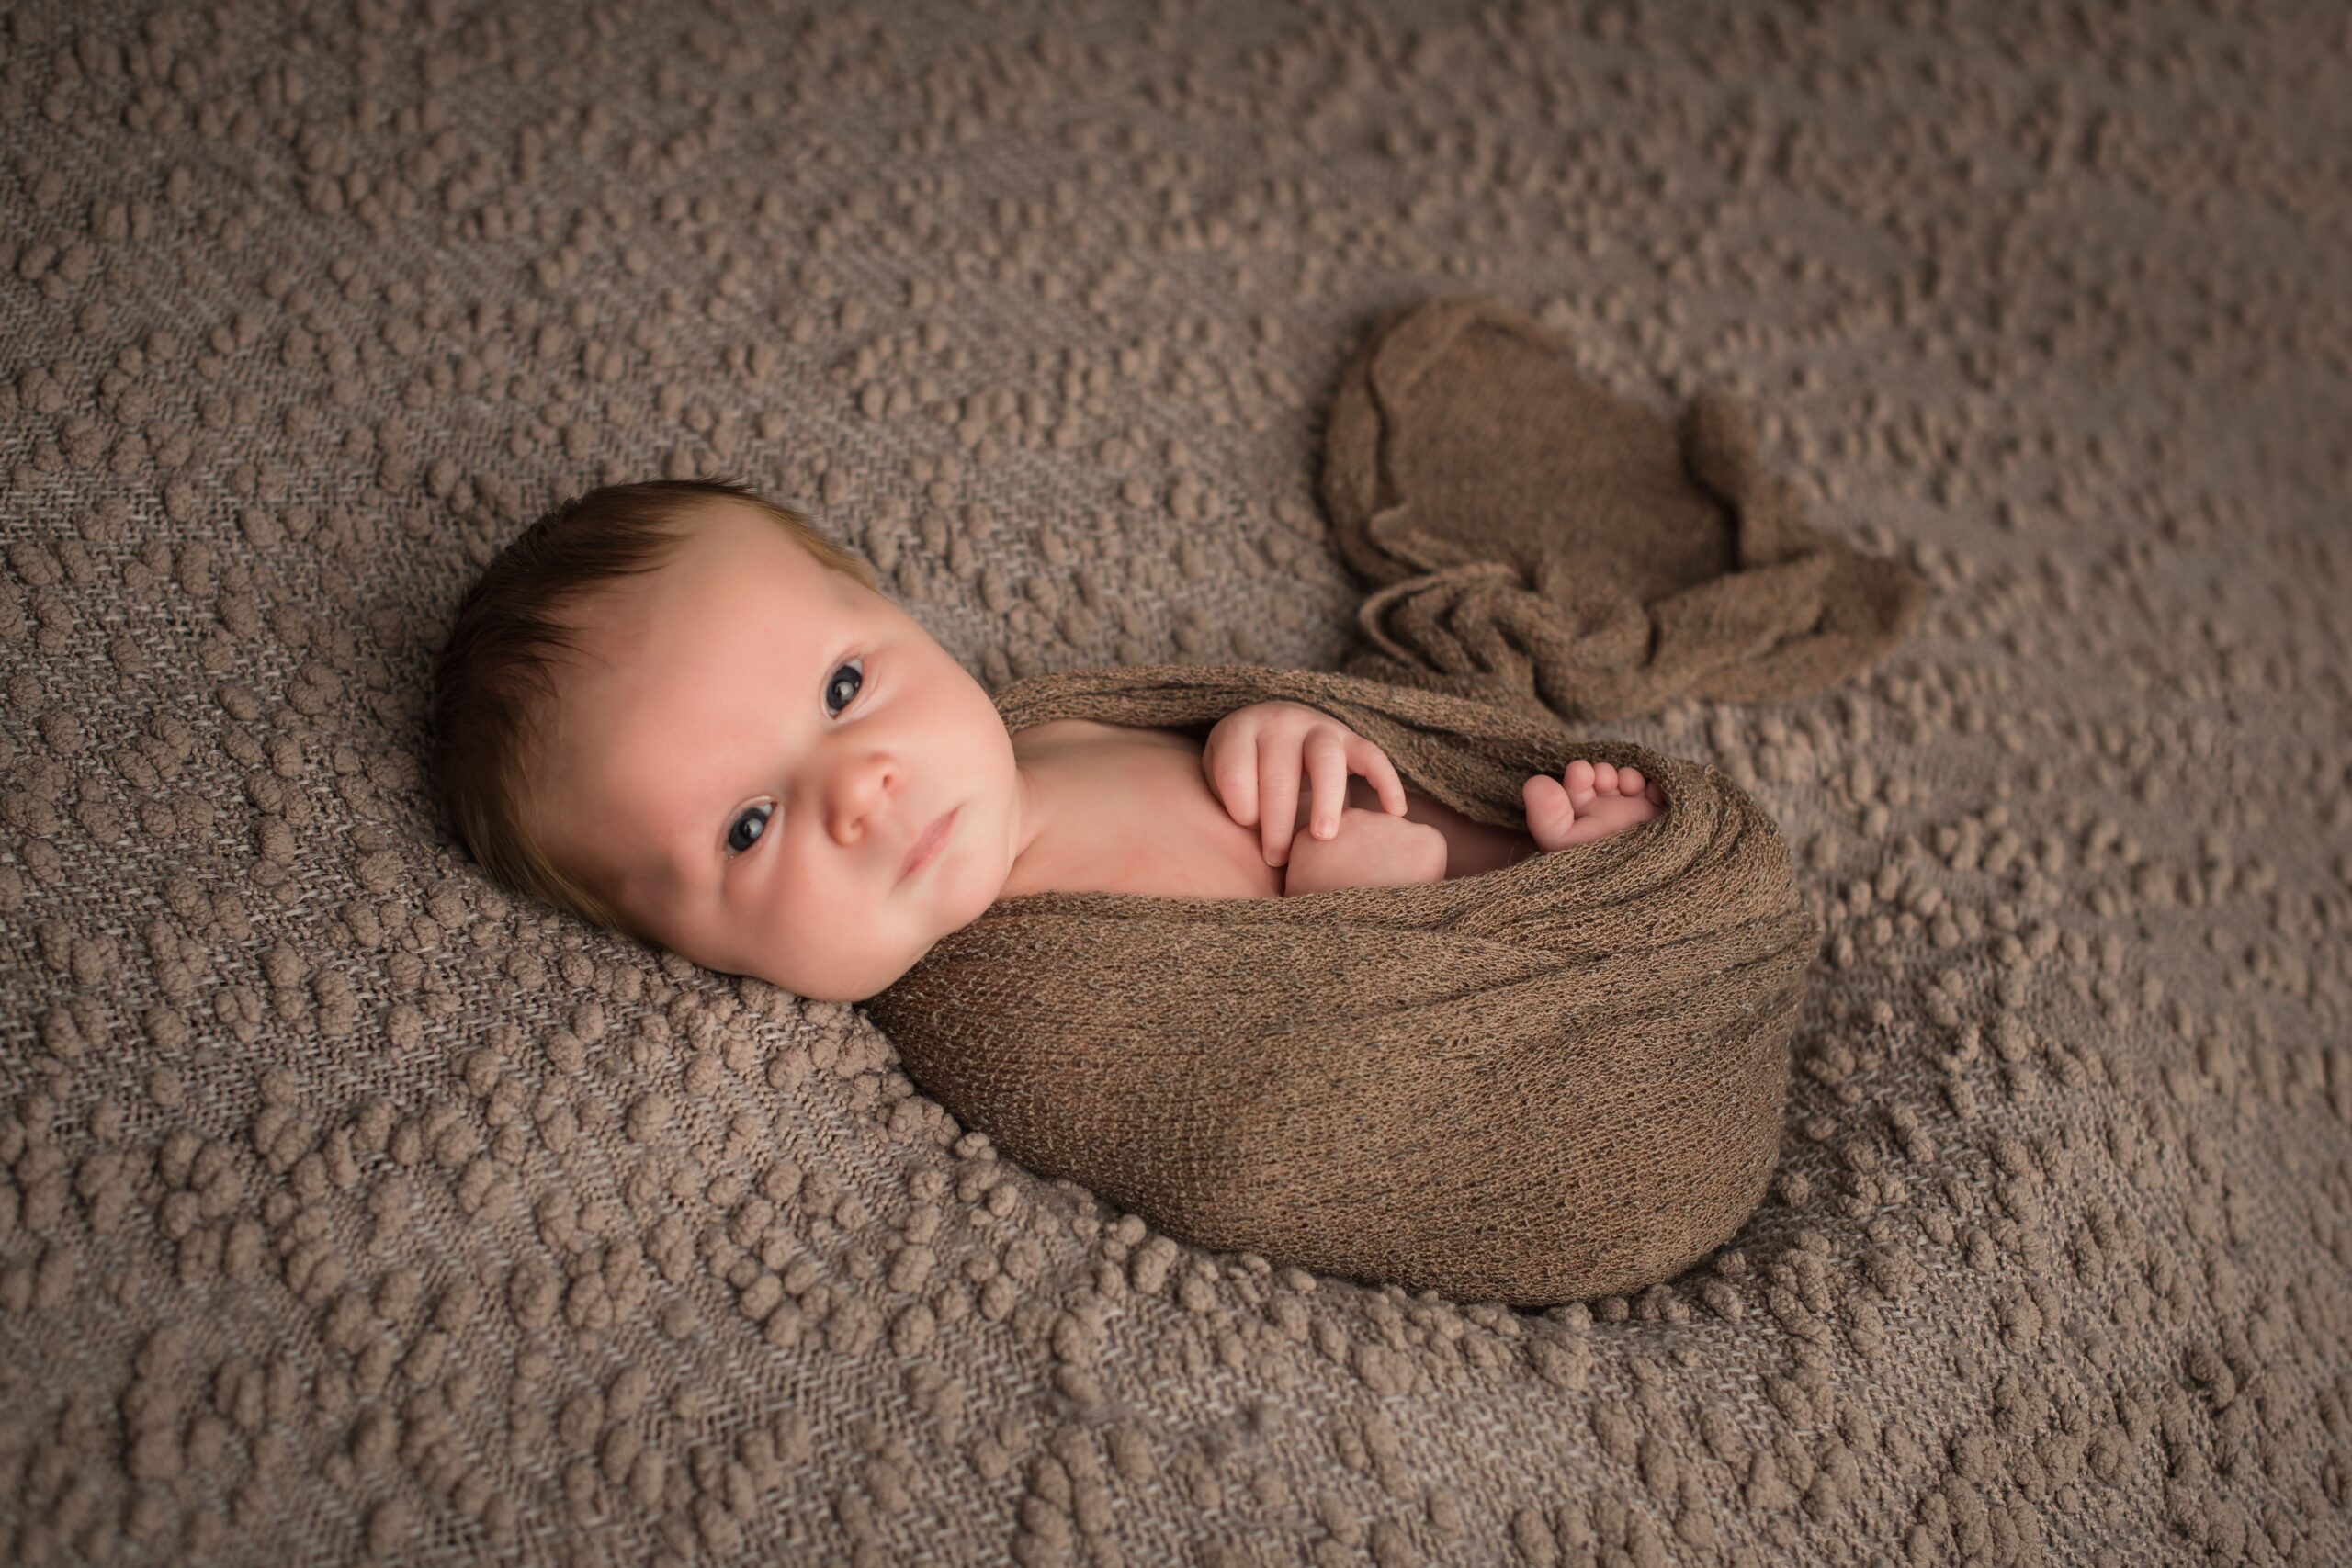 20210319  85S3743 Edit Edit scaled - Portfolio: Infant Photography